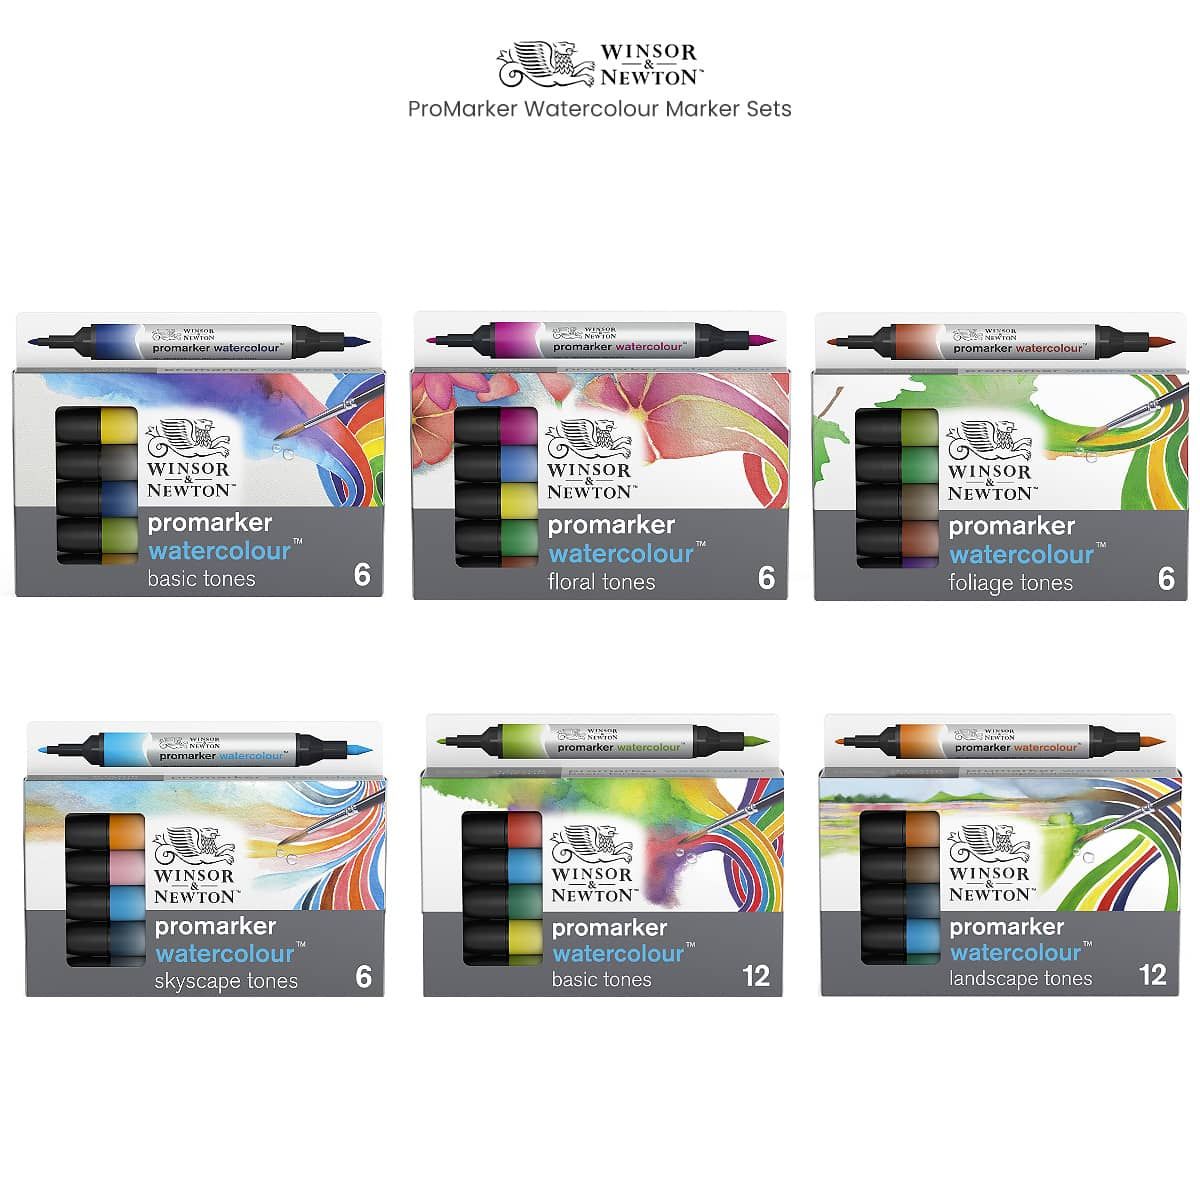 Winsor & Newton Watercolor Markers & Marker Sets